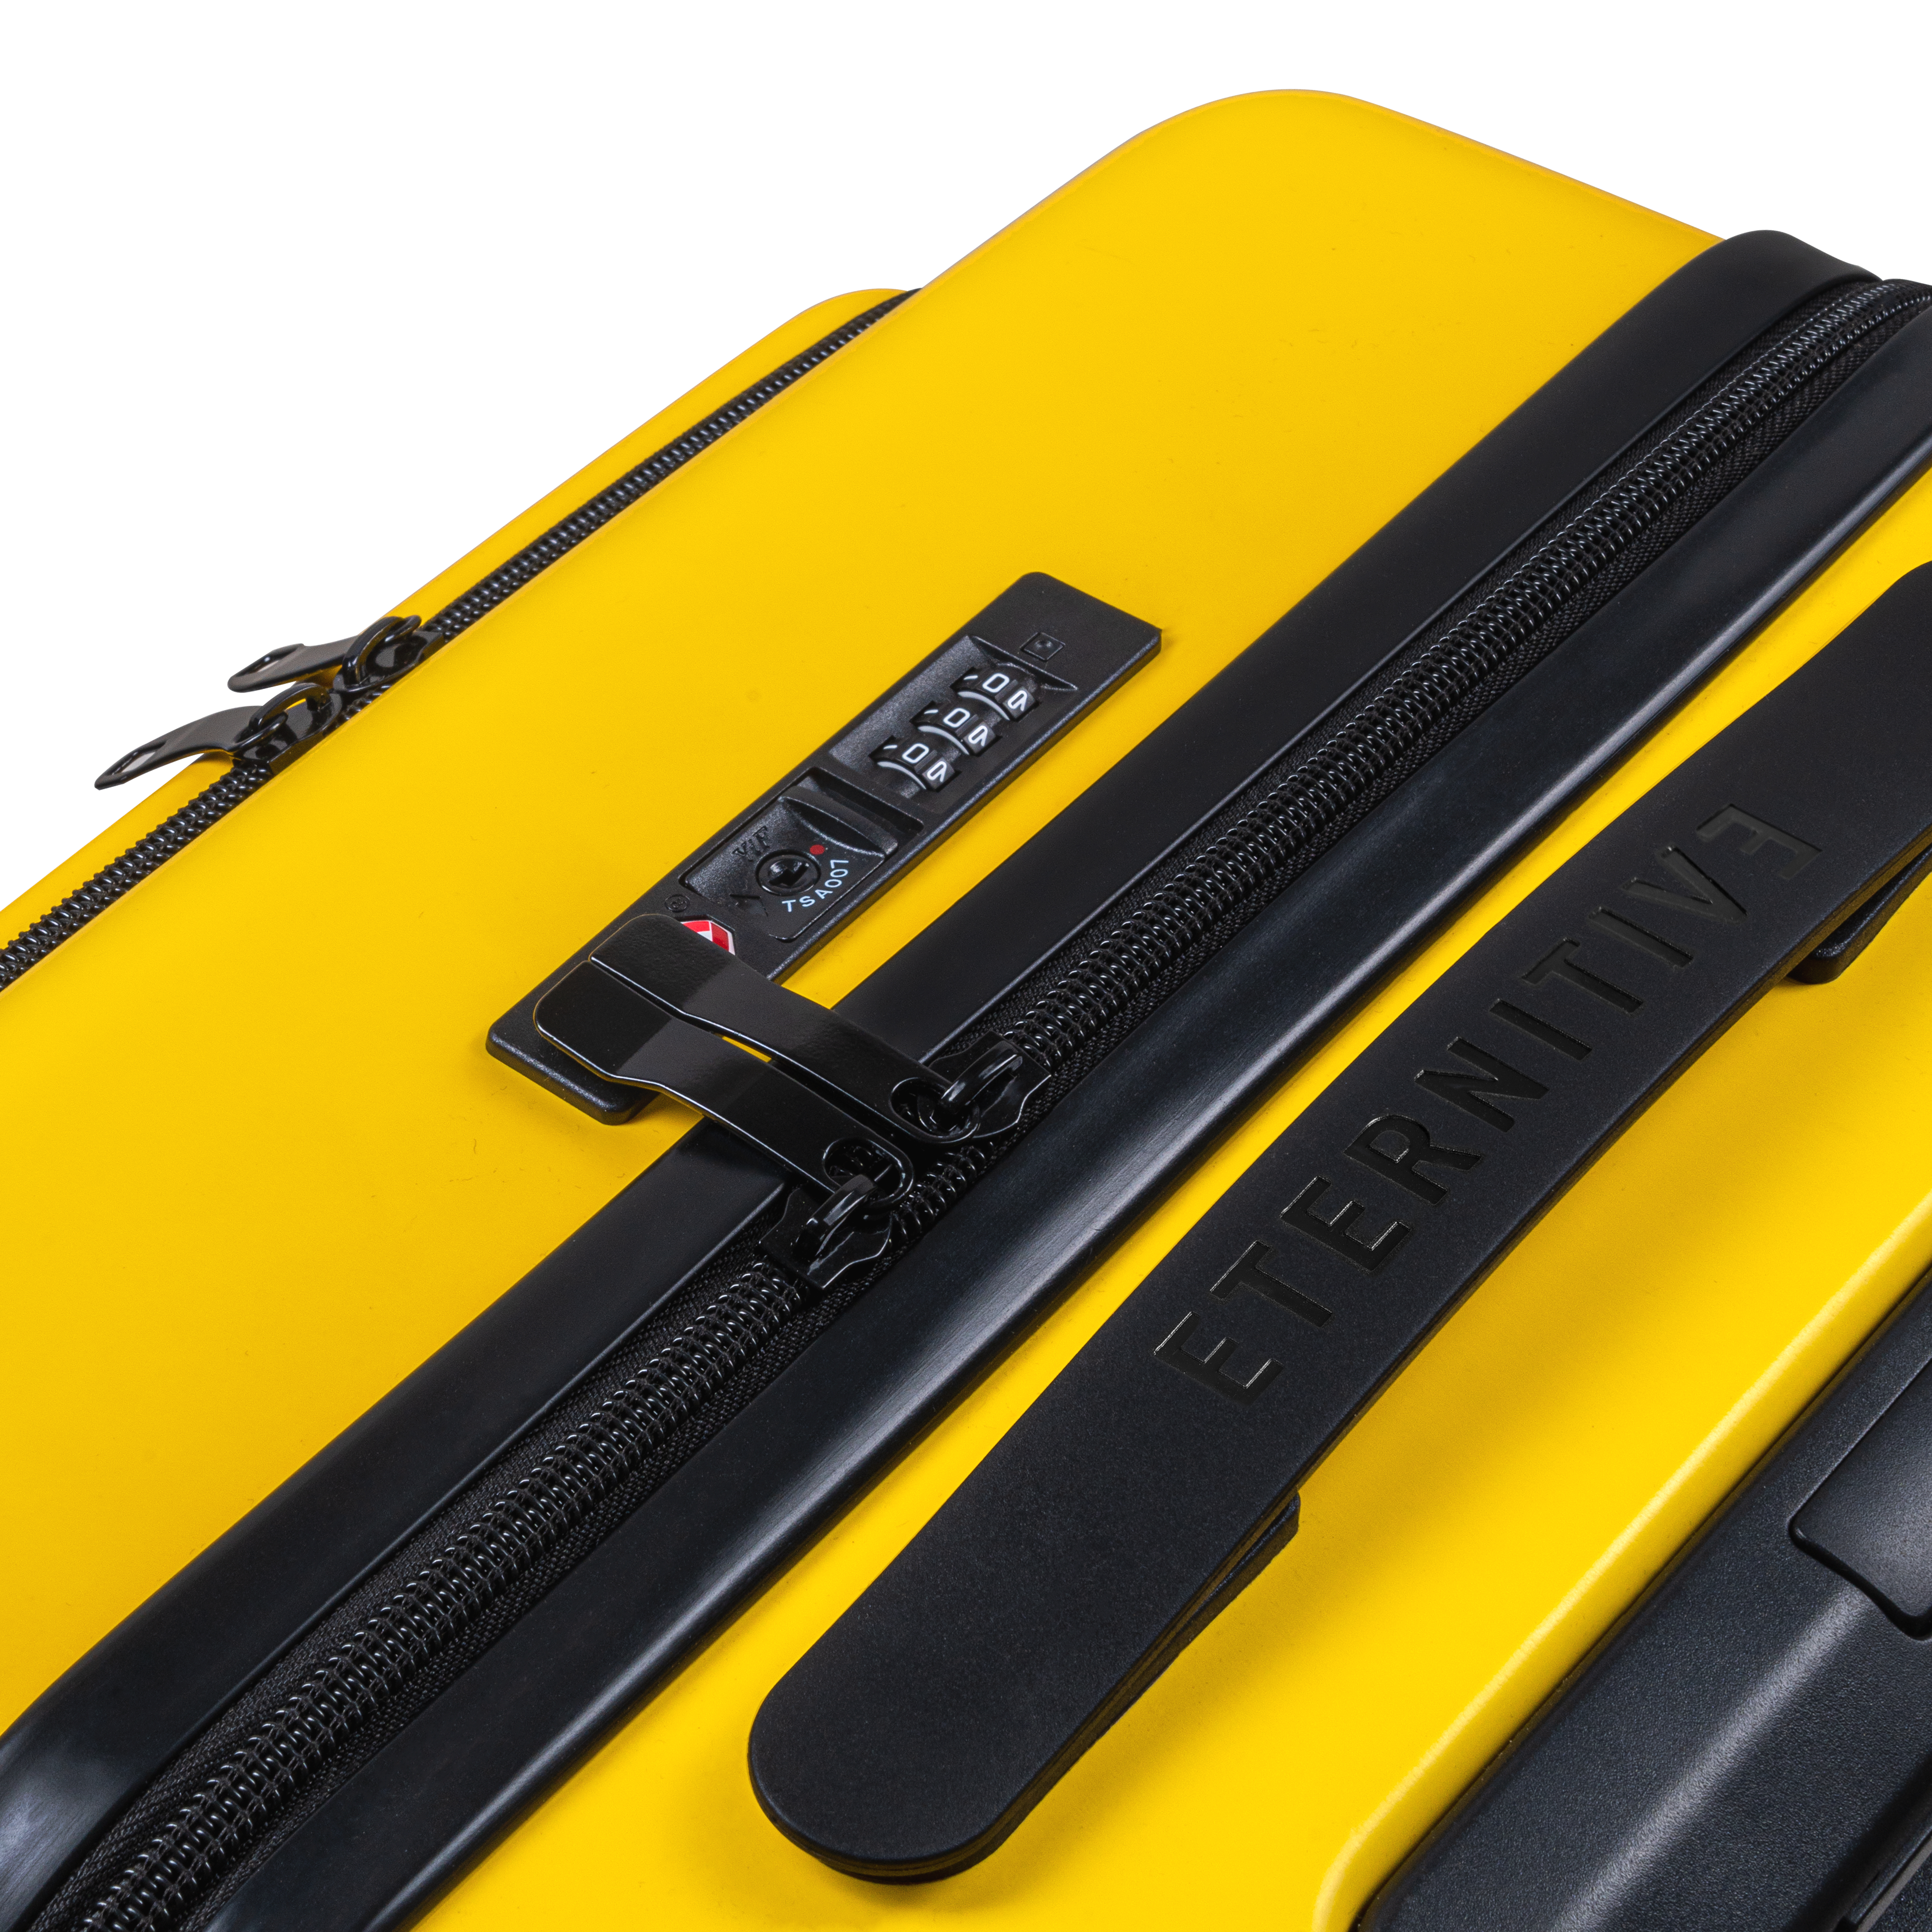 E1 koffer-set gelb: Handgepäck + Mittelgroßer Koffer